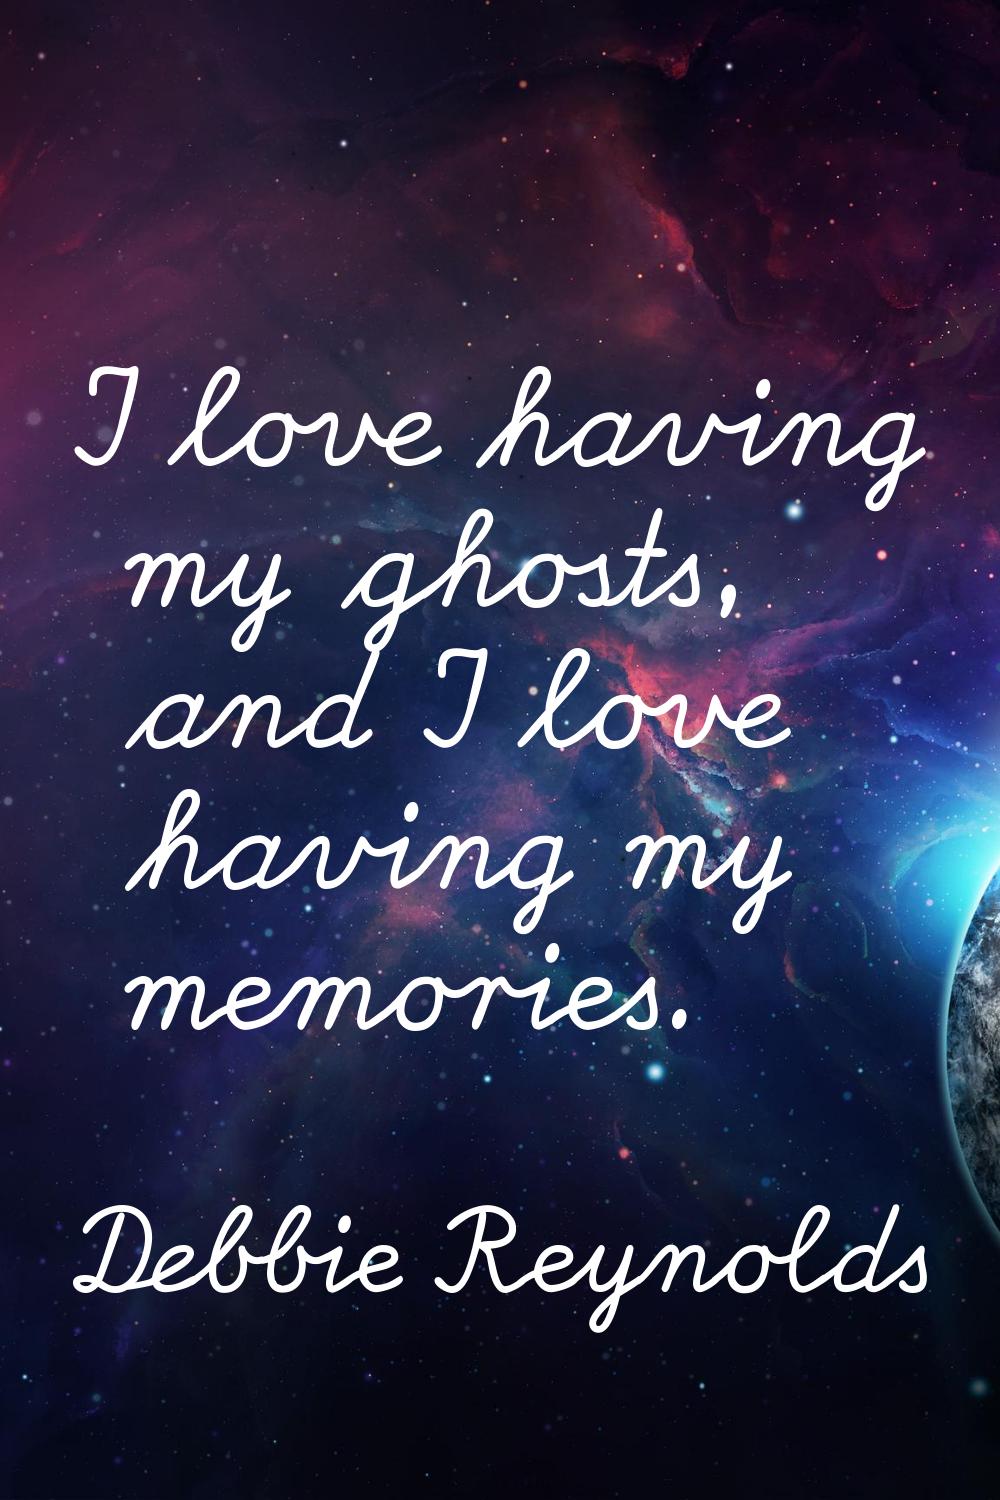 I love having my ghosts, and I love having my memories.